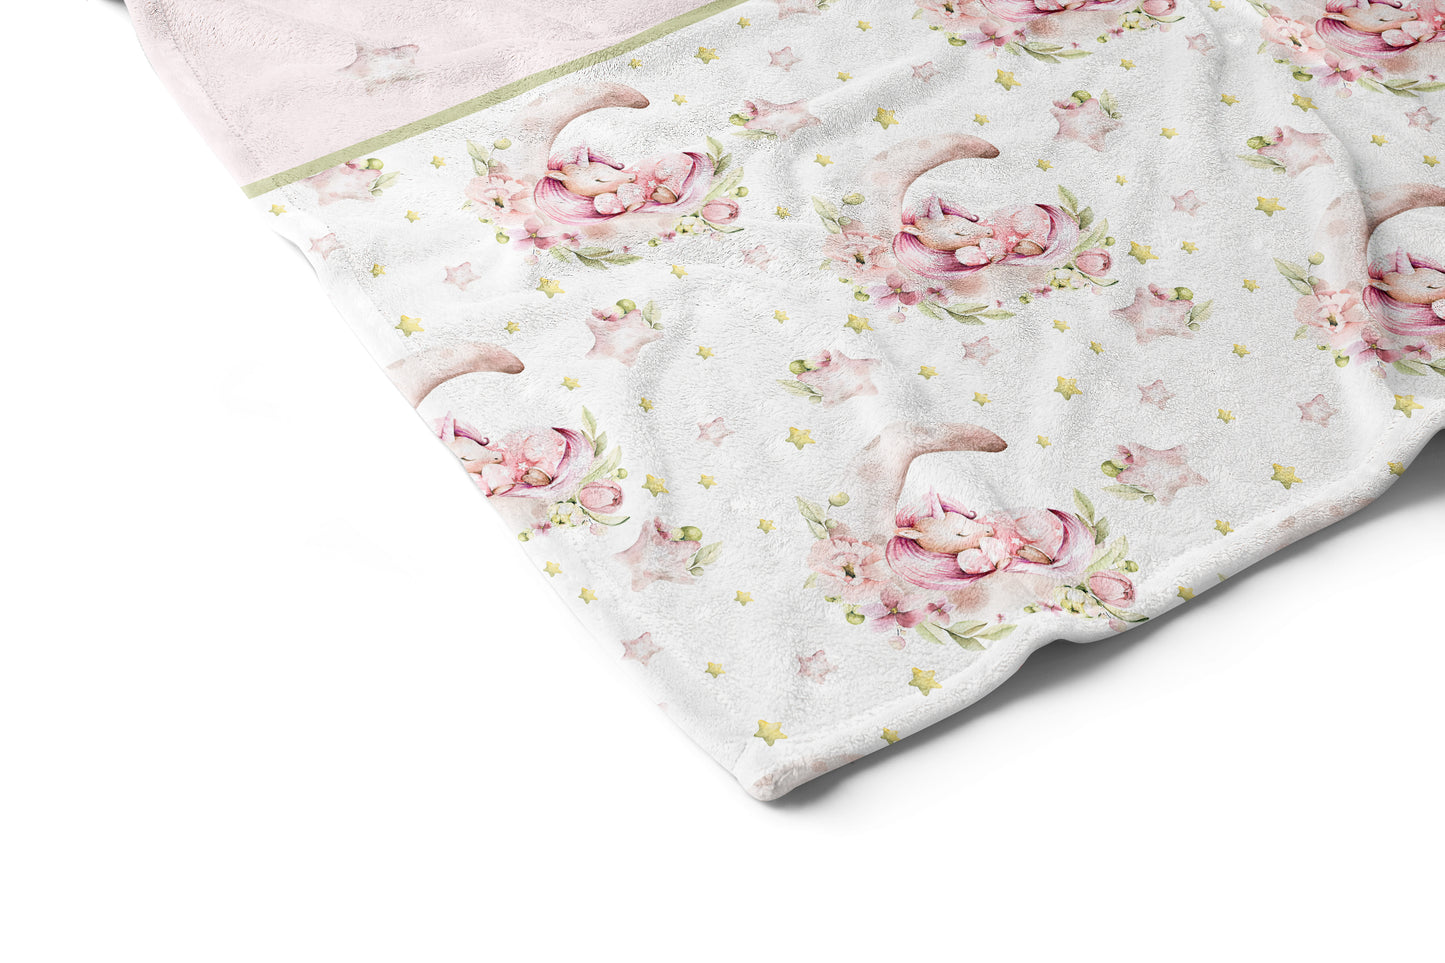 Personalized Unicorn Minky Blanket, Pink unicorn Nursery Bedding - Magical Unicorn